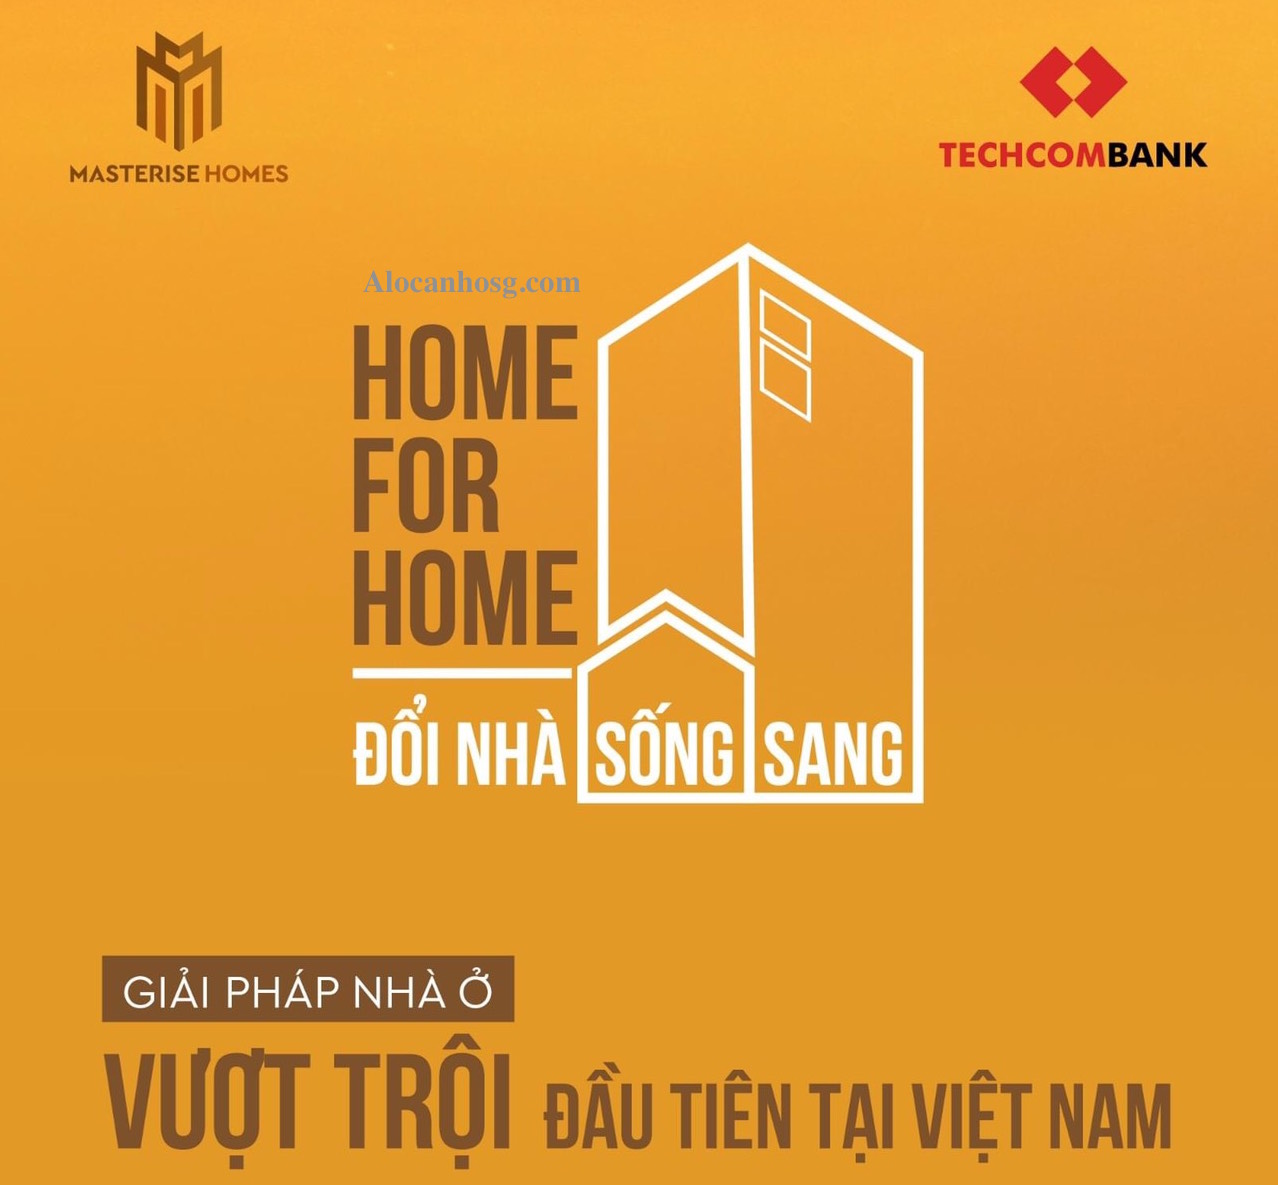 Home for Home - Masterise và TechcomBank